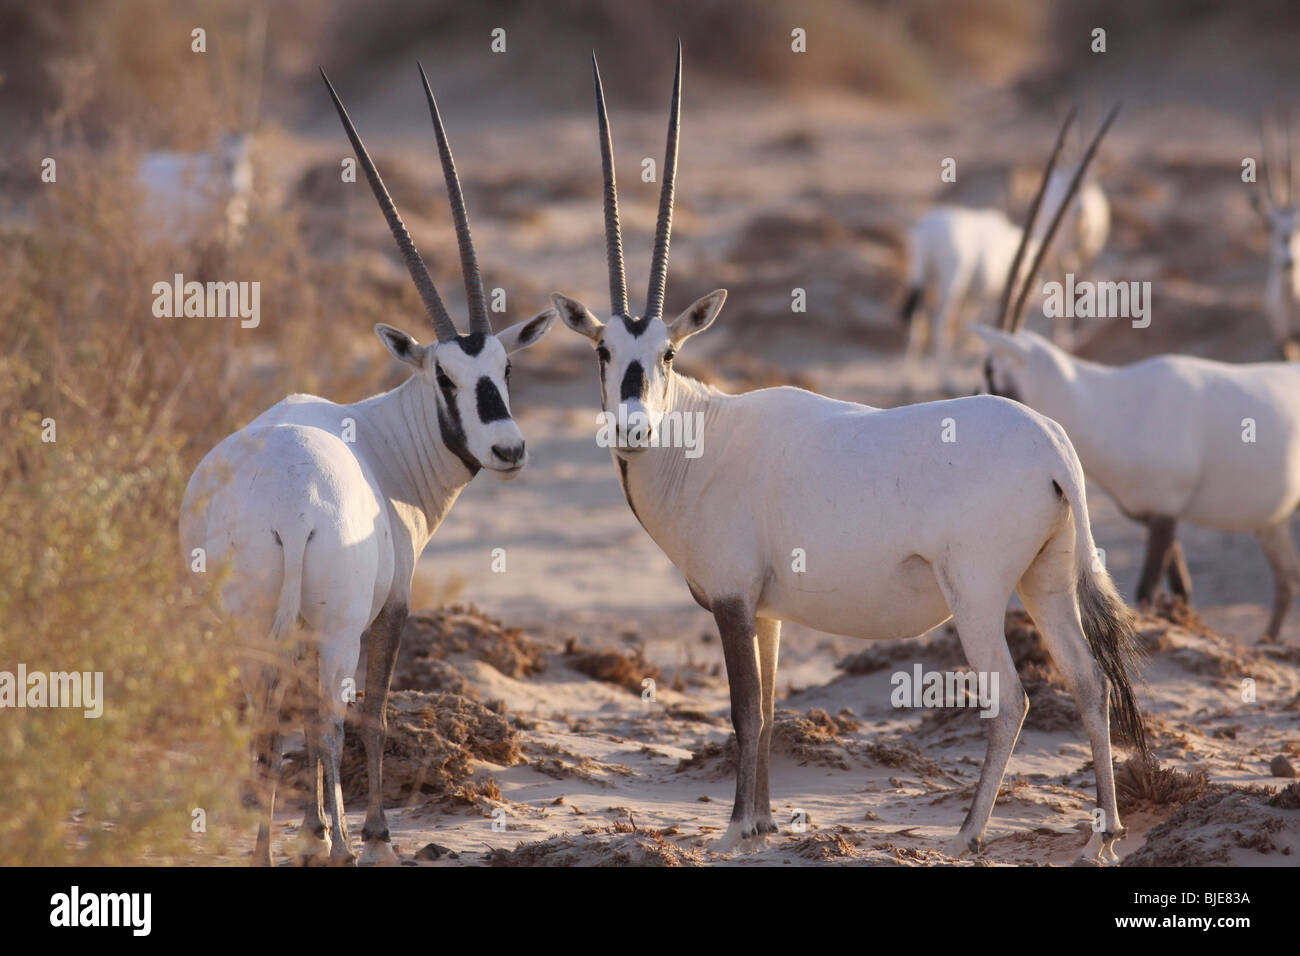 Israel, Aravah desert, A Herd of Arabian White Oryx (Oryx leucoryx). Stock Photo